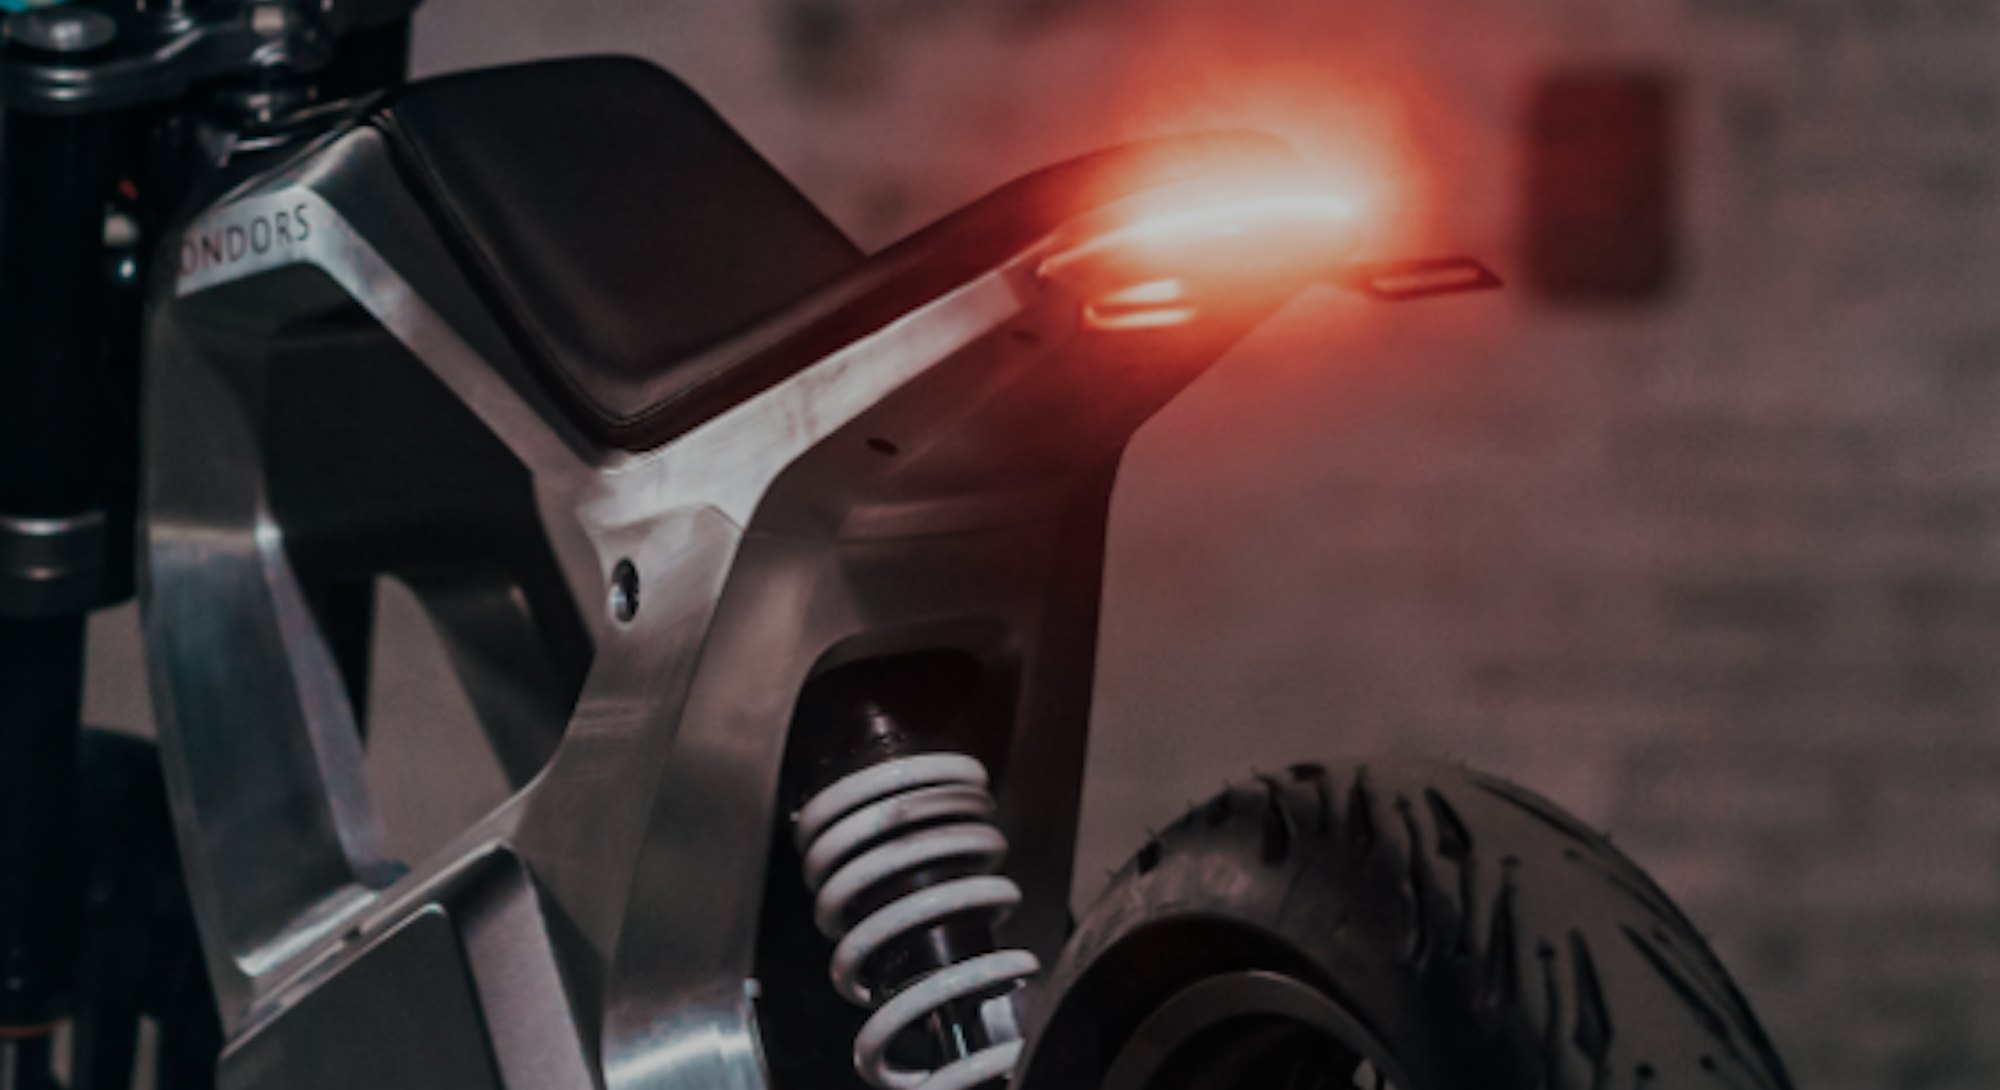 Sondors Metacycle electric motorcycle. EV. EVs. E-motorcycle. E-bikes. EVs. Electric vehicles.